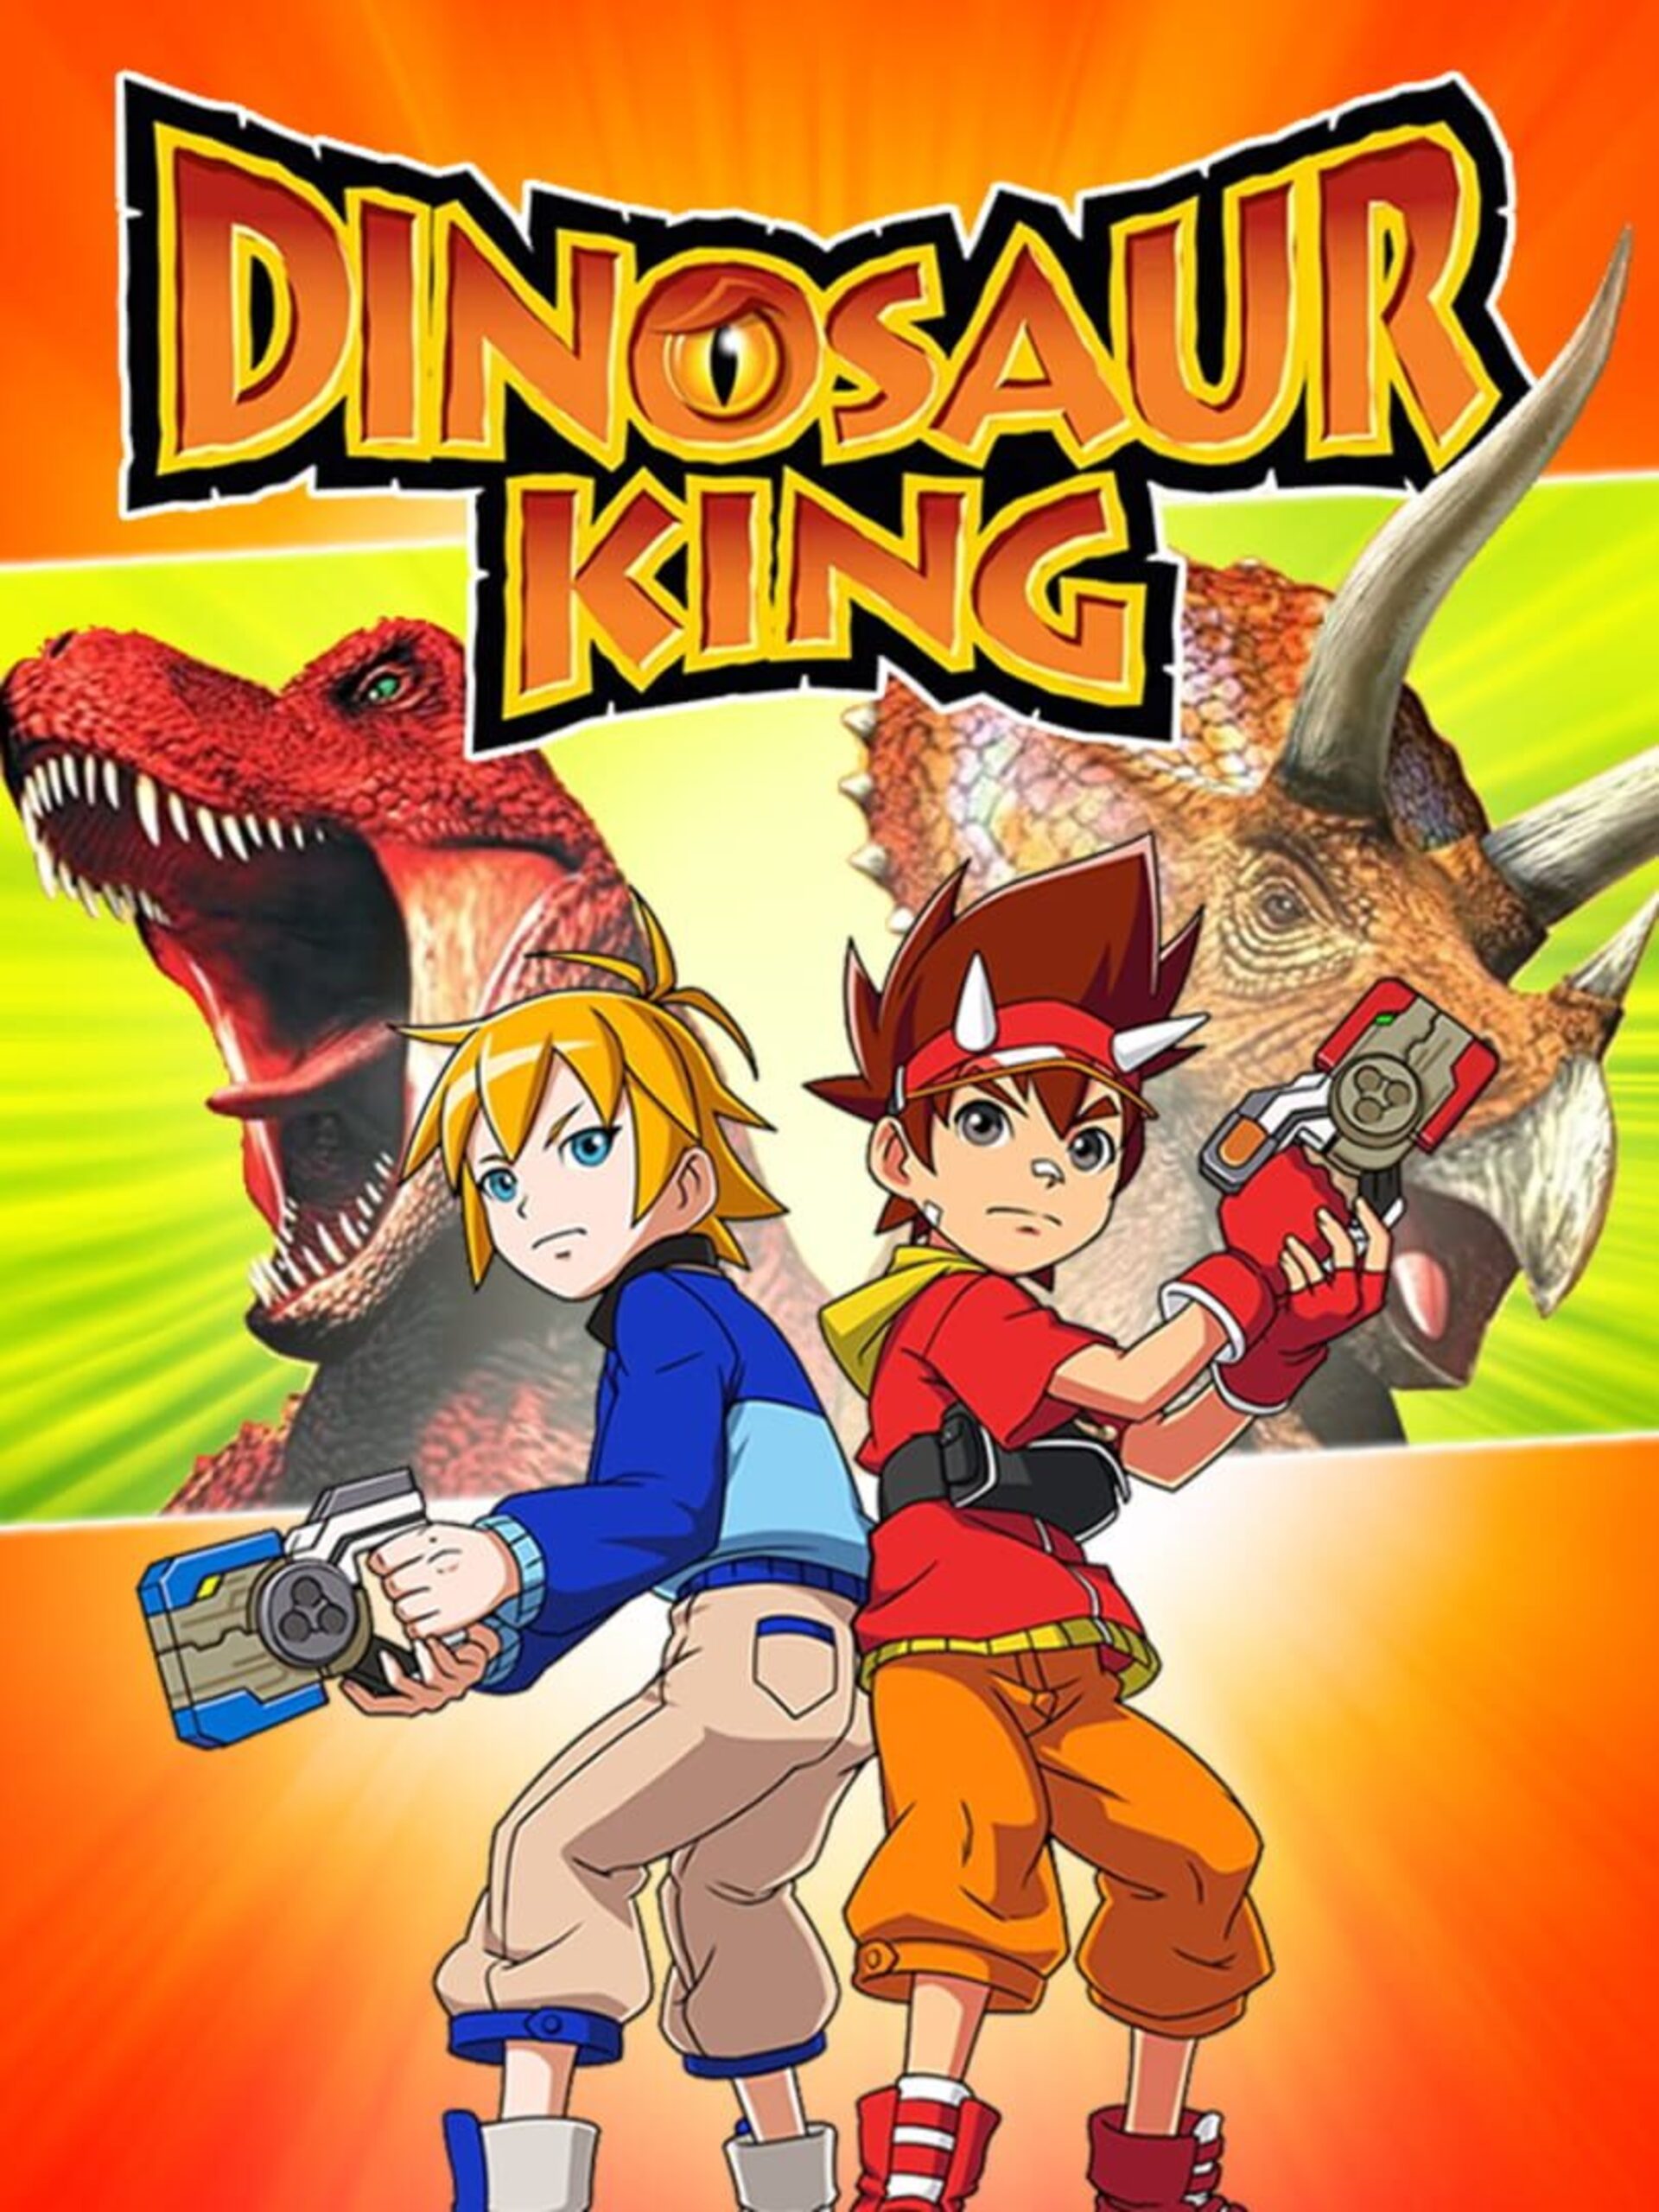 Nintendo king. Dinosaur King.